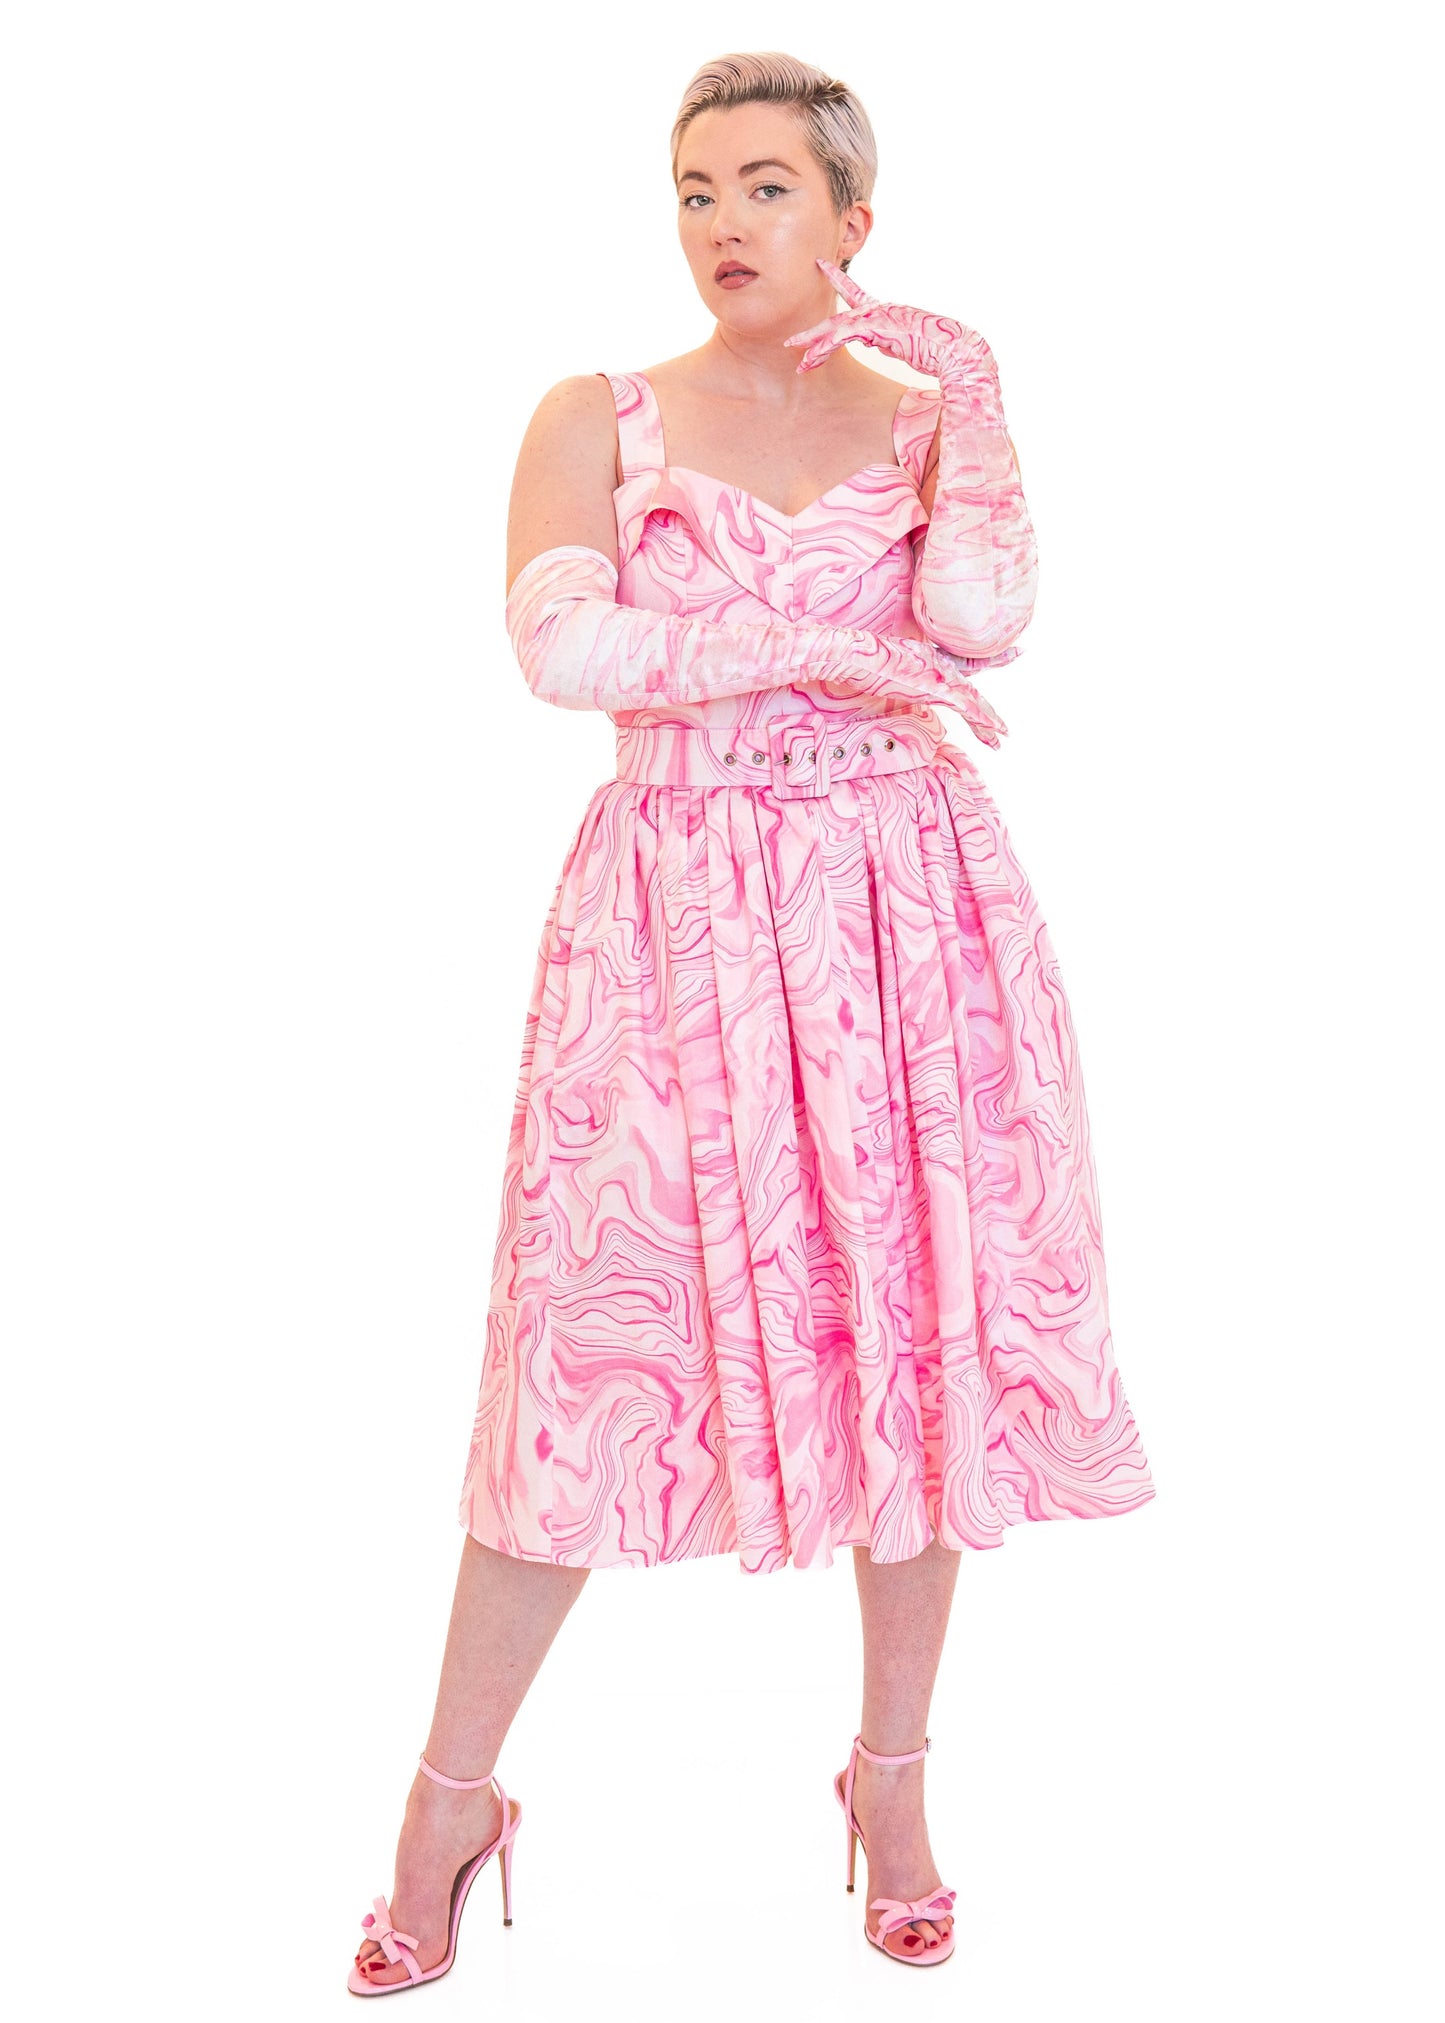 The Rose Quartz Geode Dress - Pink